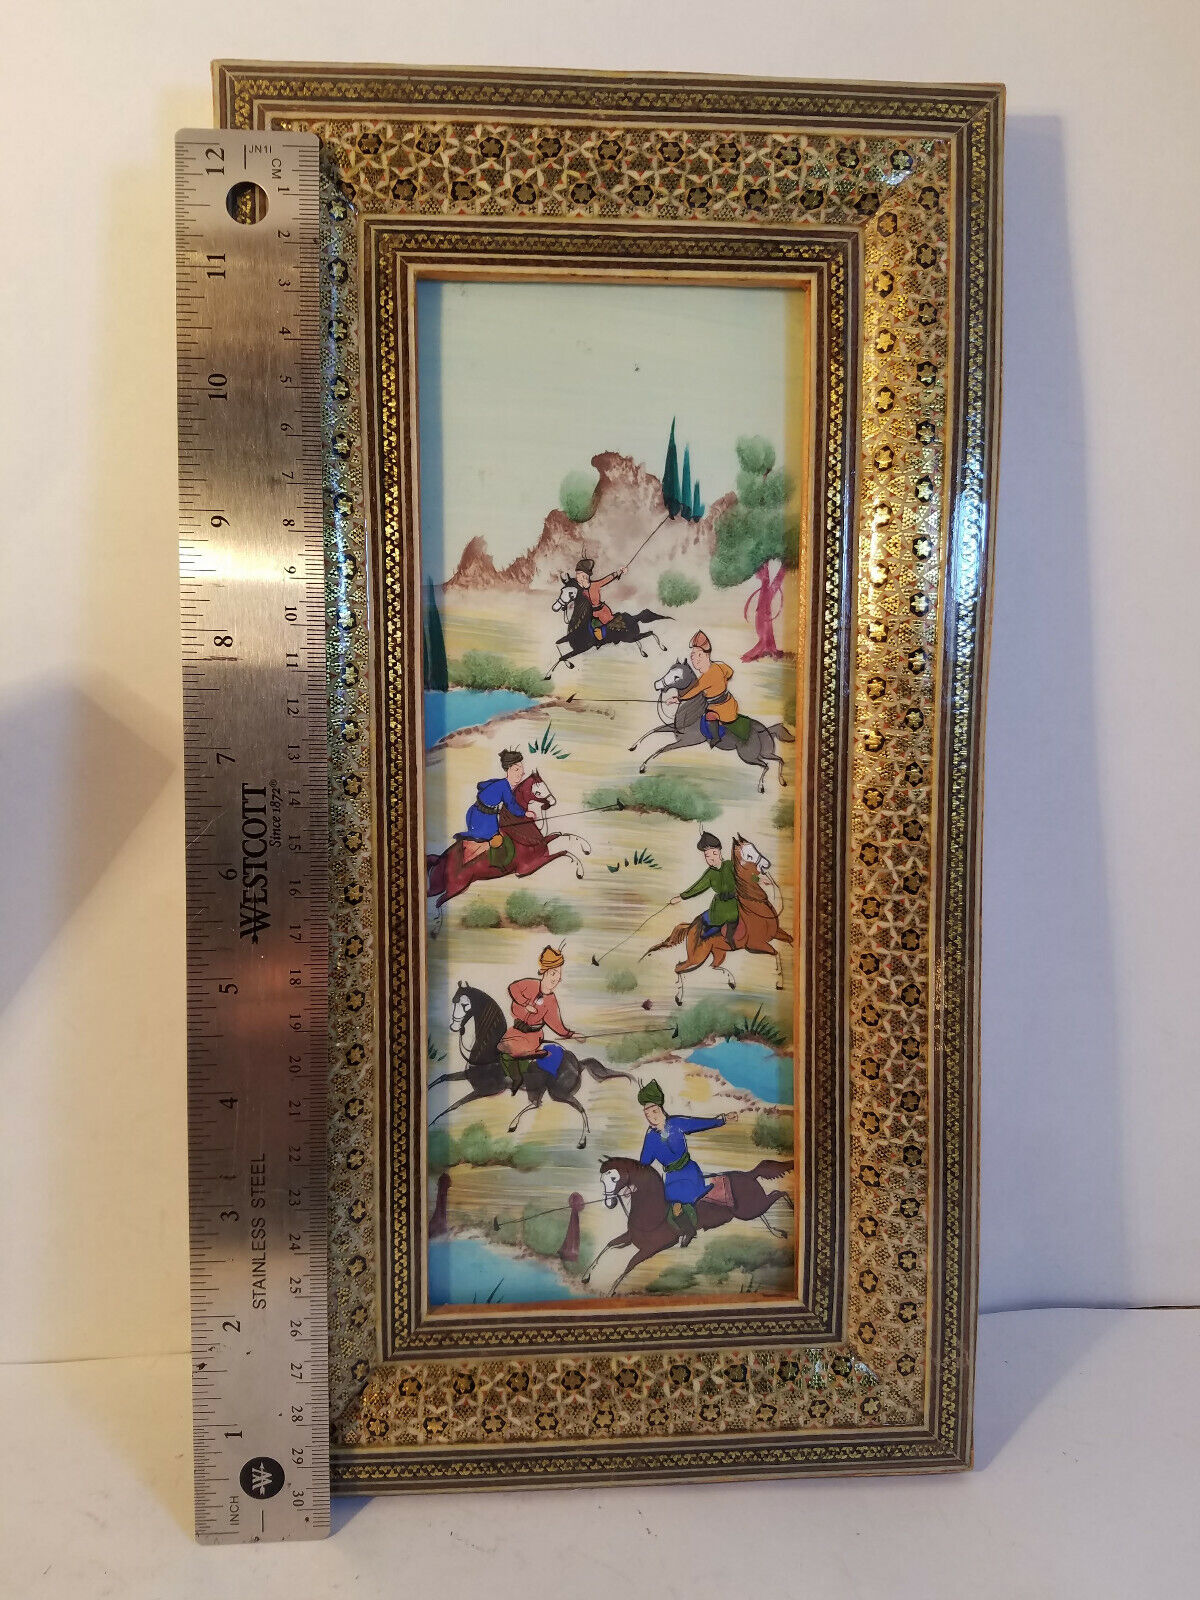 Lot of 2 Vintage Persian Equestrian Paintings in Wooden Khatam Inlay Frames Без бренда - фотография #11